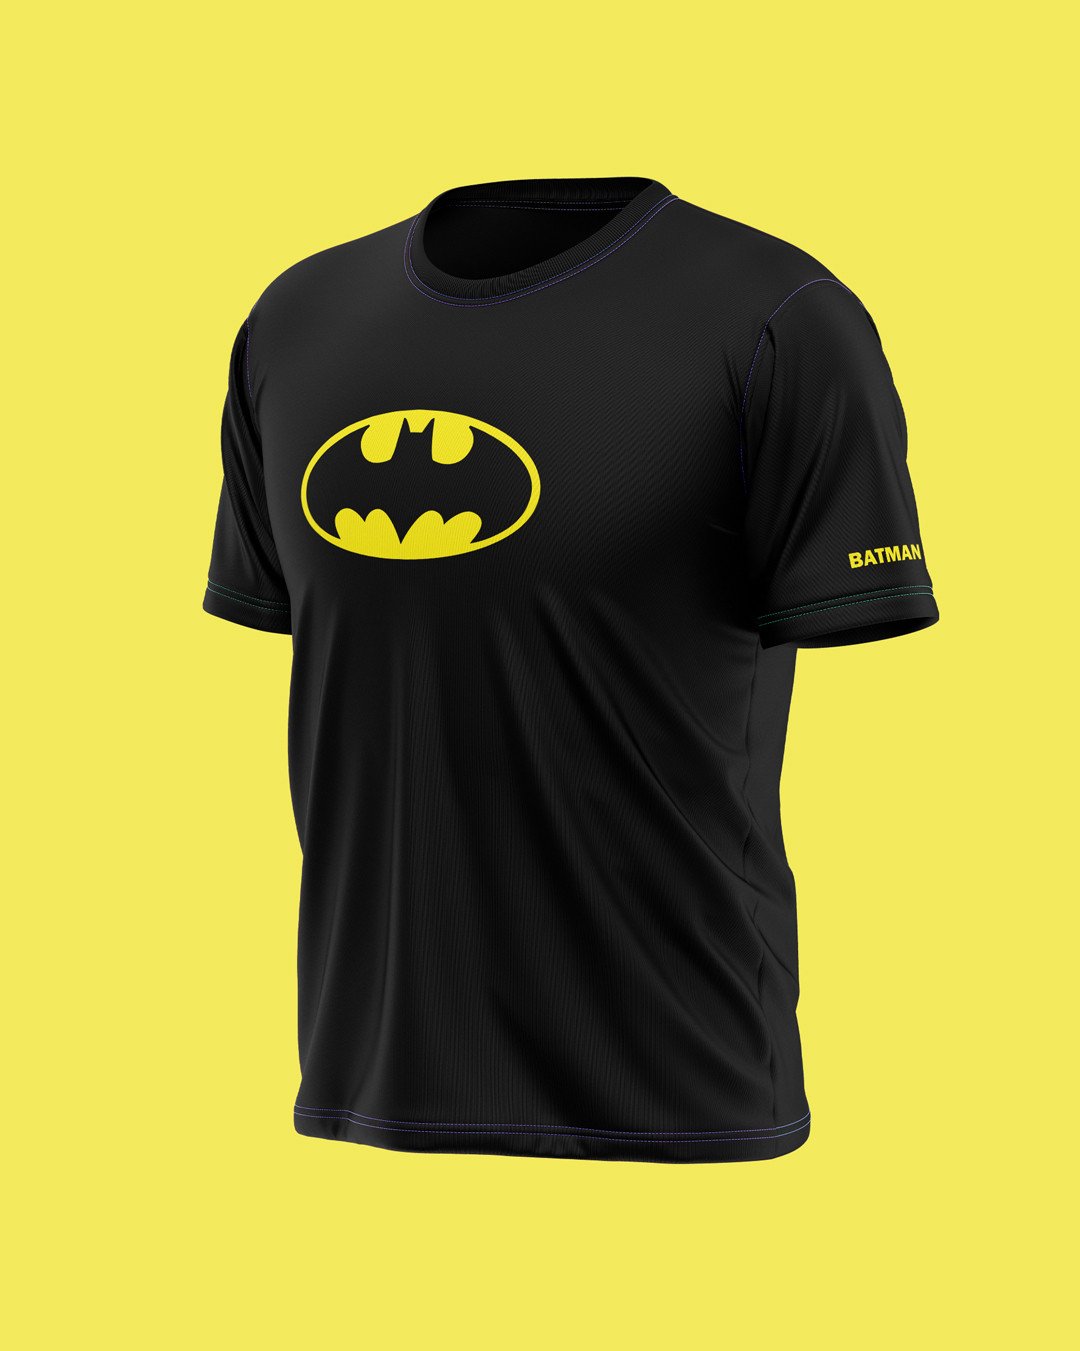 TeesWarrior Batman Logo Design T-Shirt – Dark Knight Graphic Printed 100% Cotton T-Shirt - Regular Fit, Round Neck, Half Sleeves